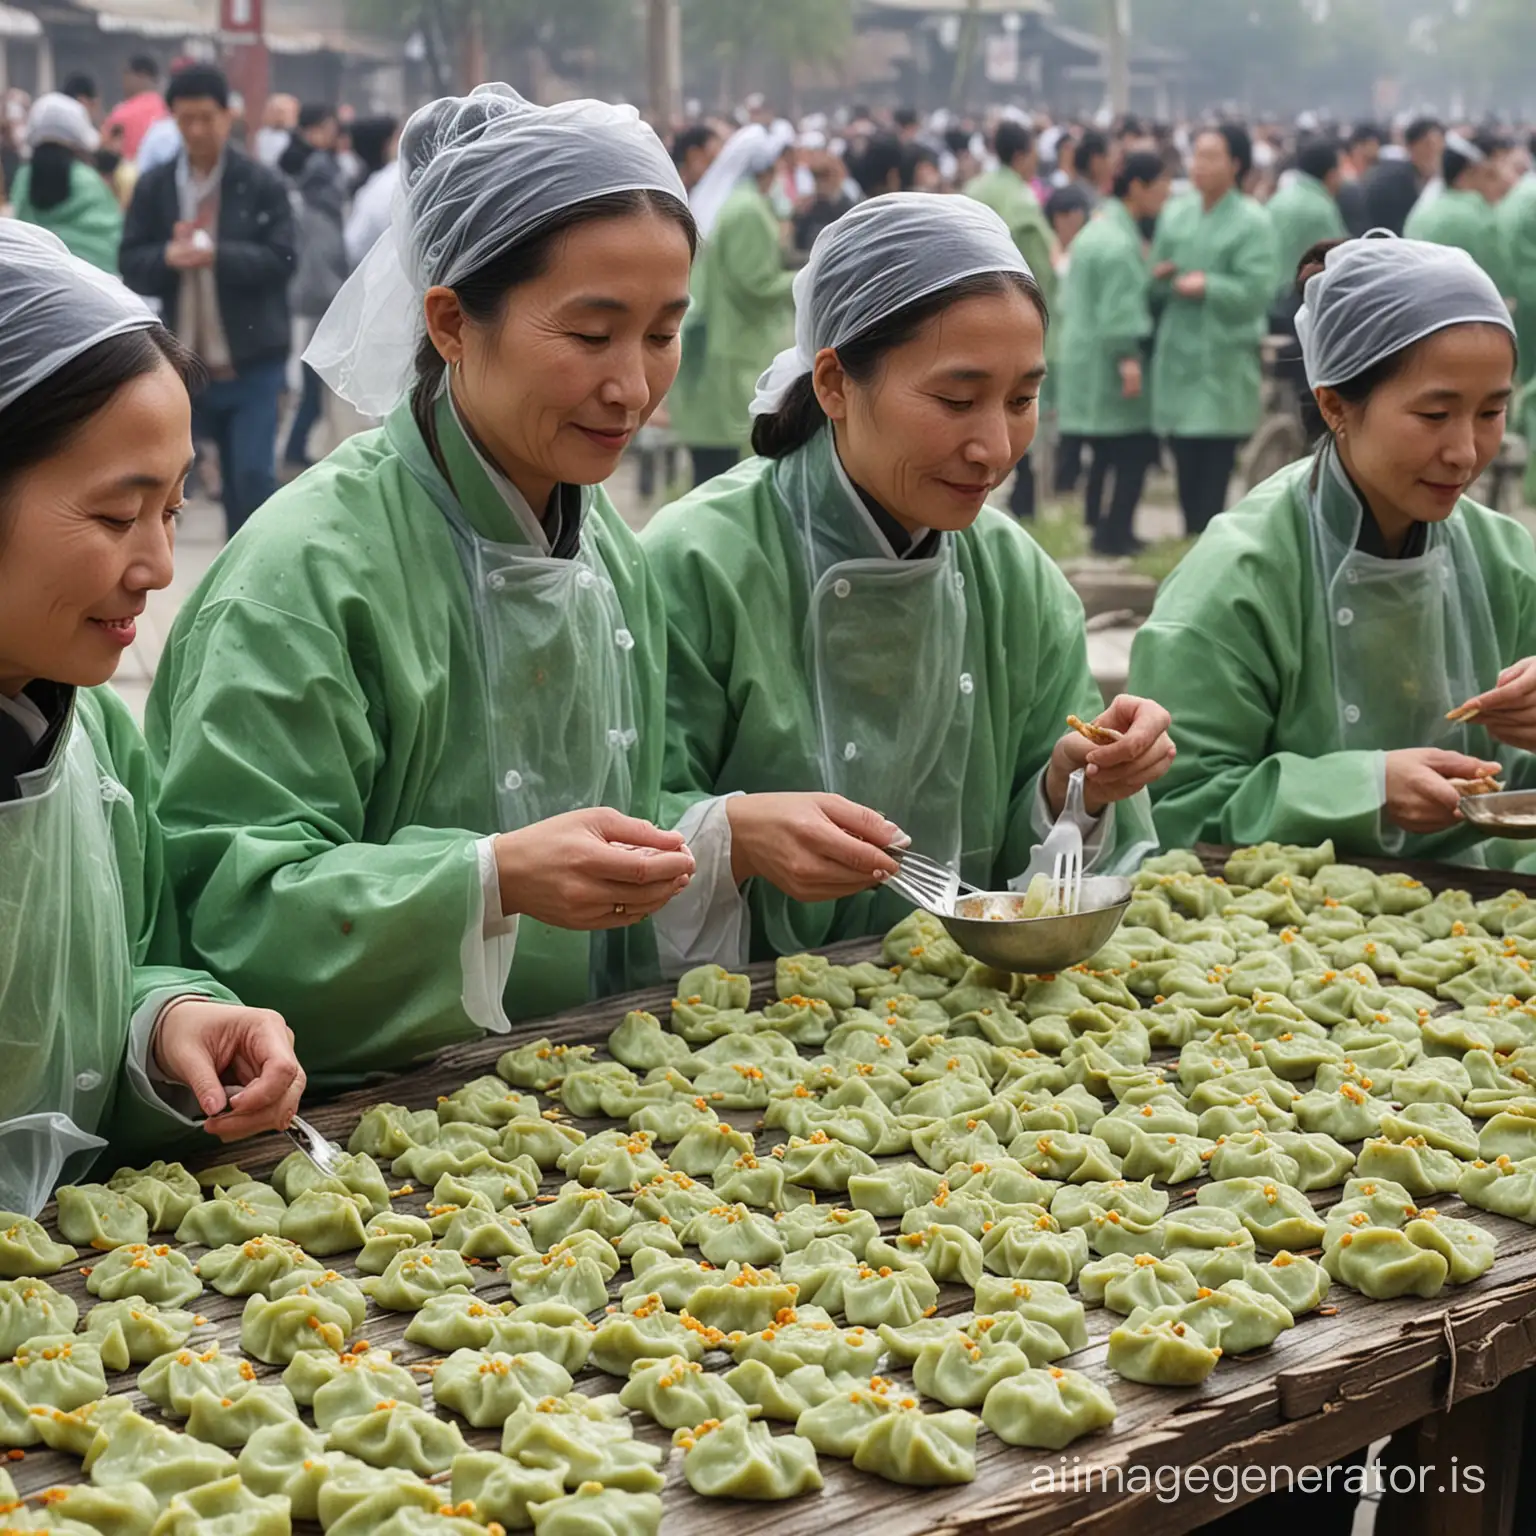 Families-Commemorate-Deceased-with-Green-Dumplings-at-Qingming-Festival